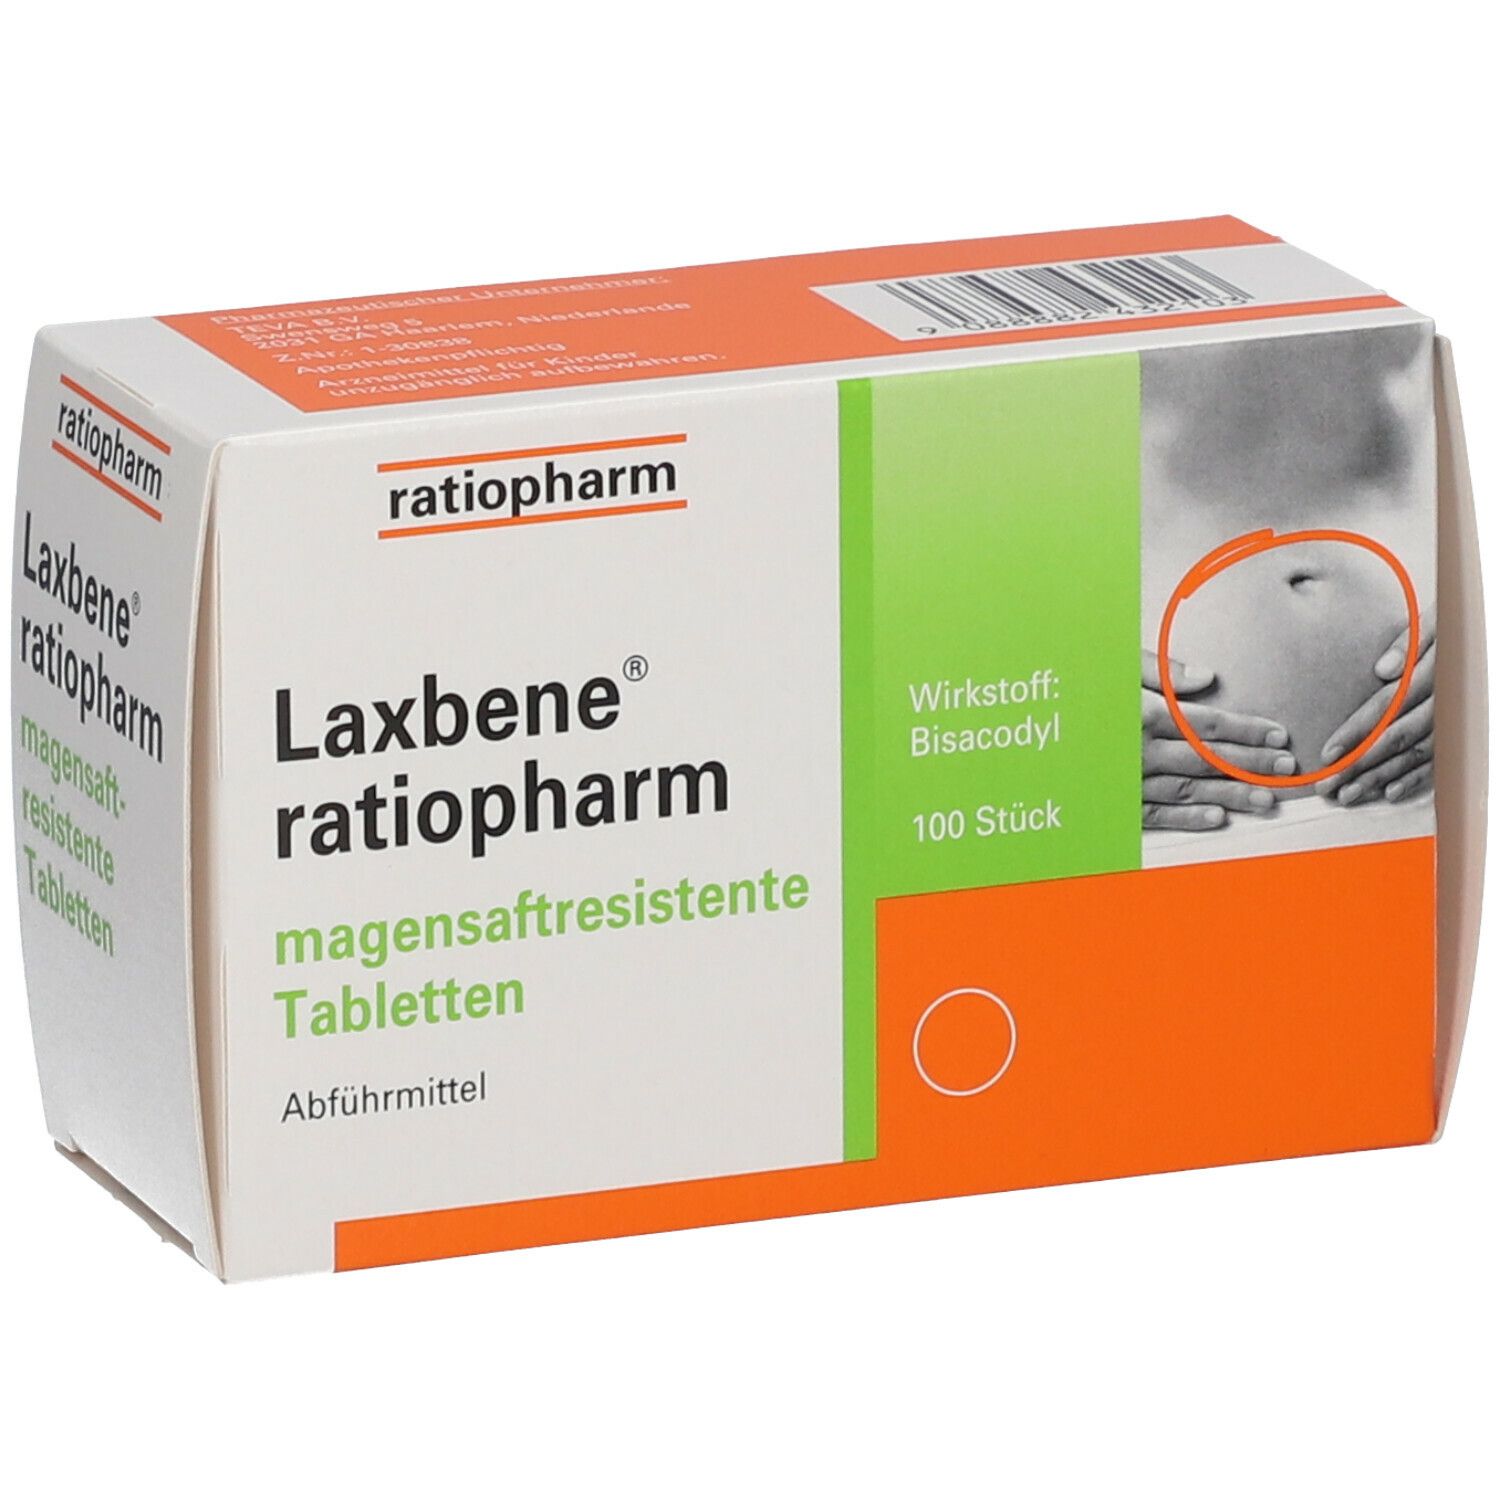 Laxbene® ratiopharm